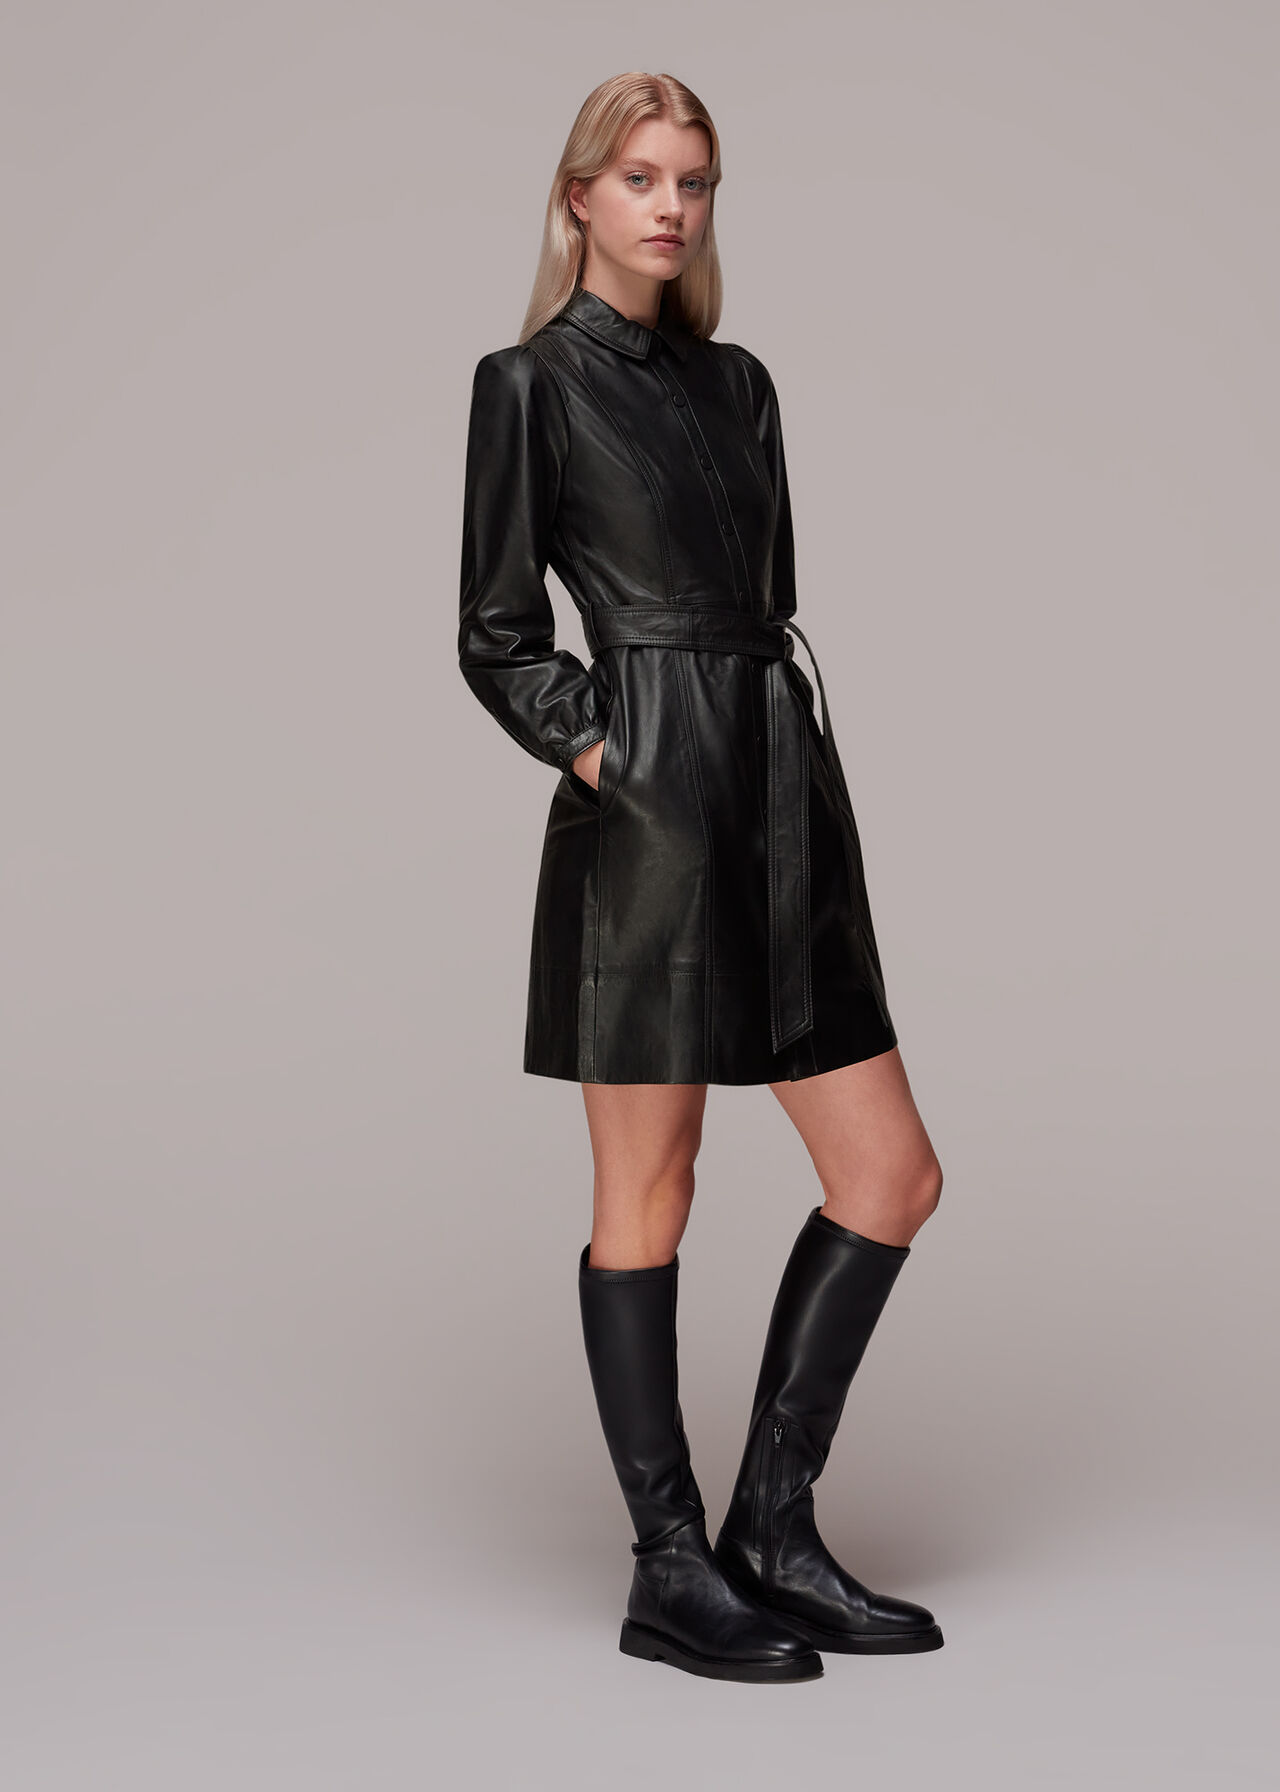 Whistles Women's Phoebe Short Leather Dress - Black - 16